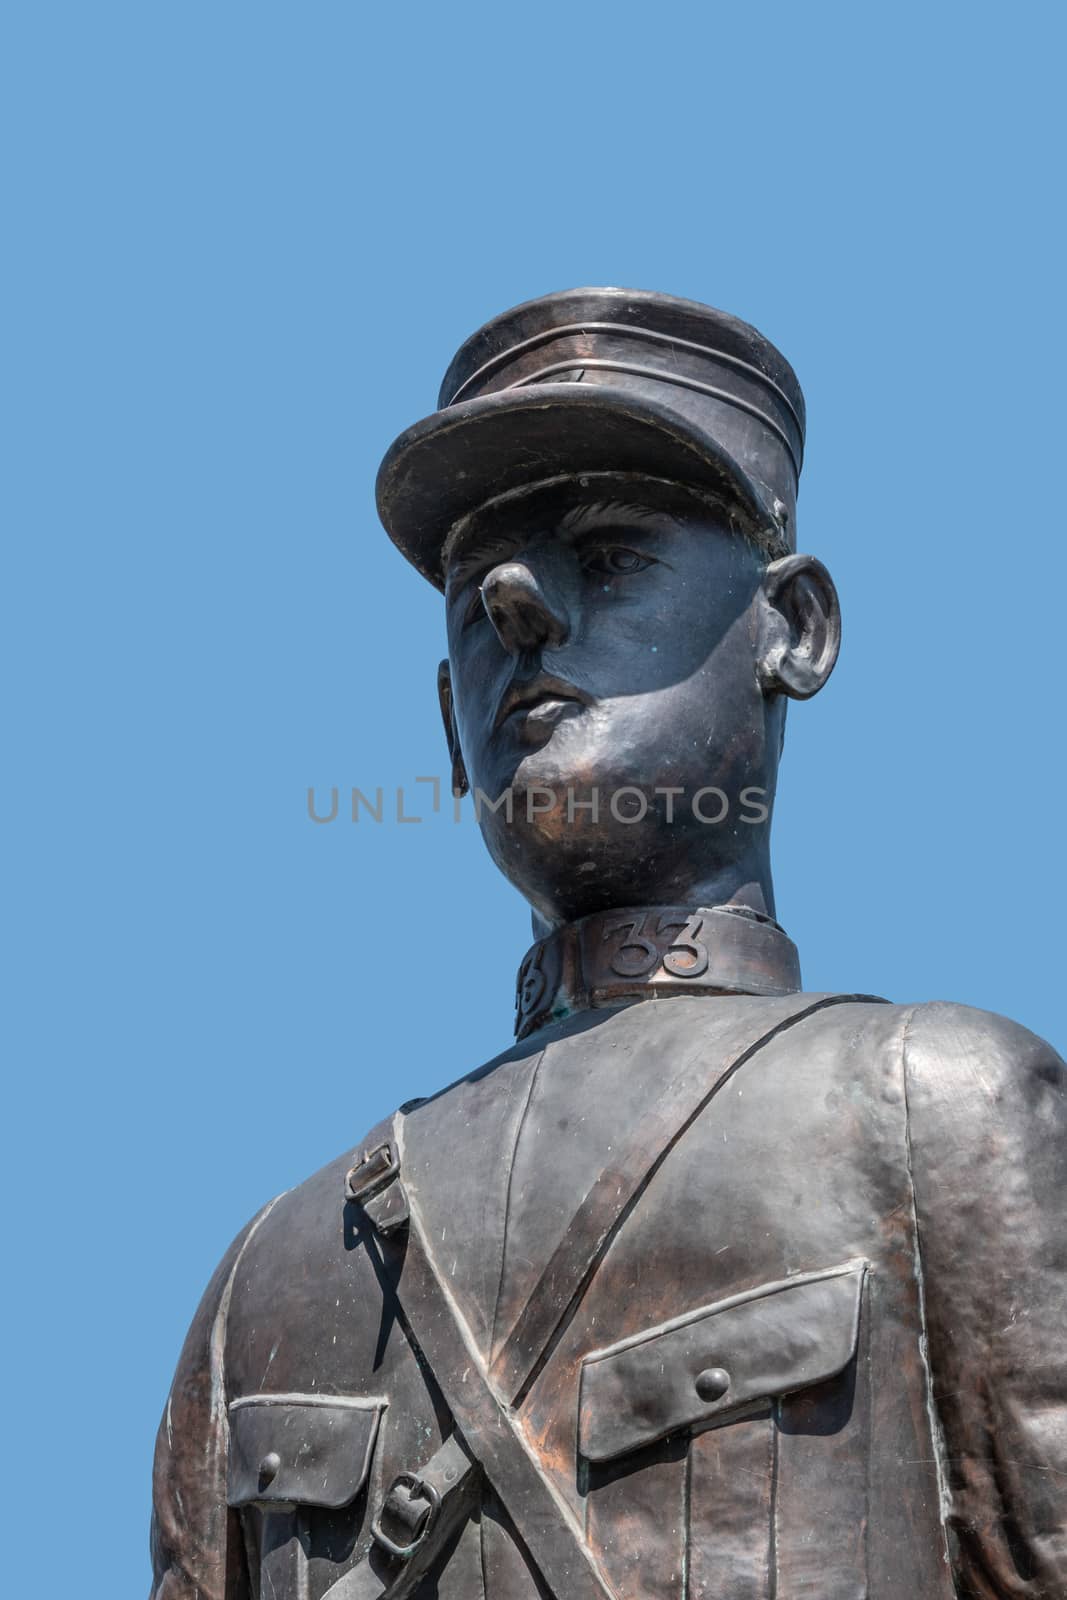 Dinant, Belgium - June 26, 2019: Closeup of dark bronze bust and head of Charles de Gaulle statue against blue sky.